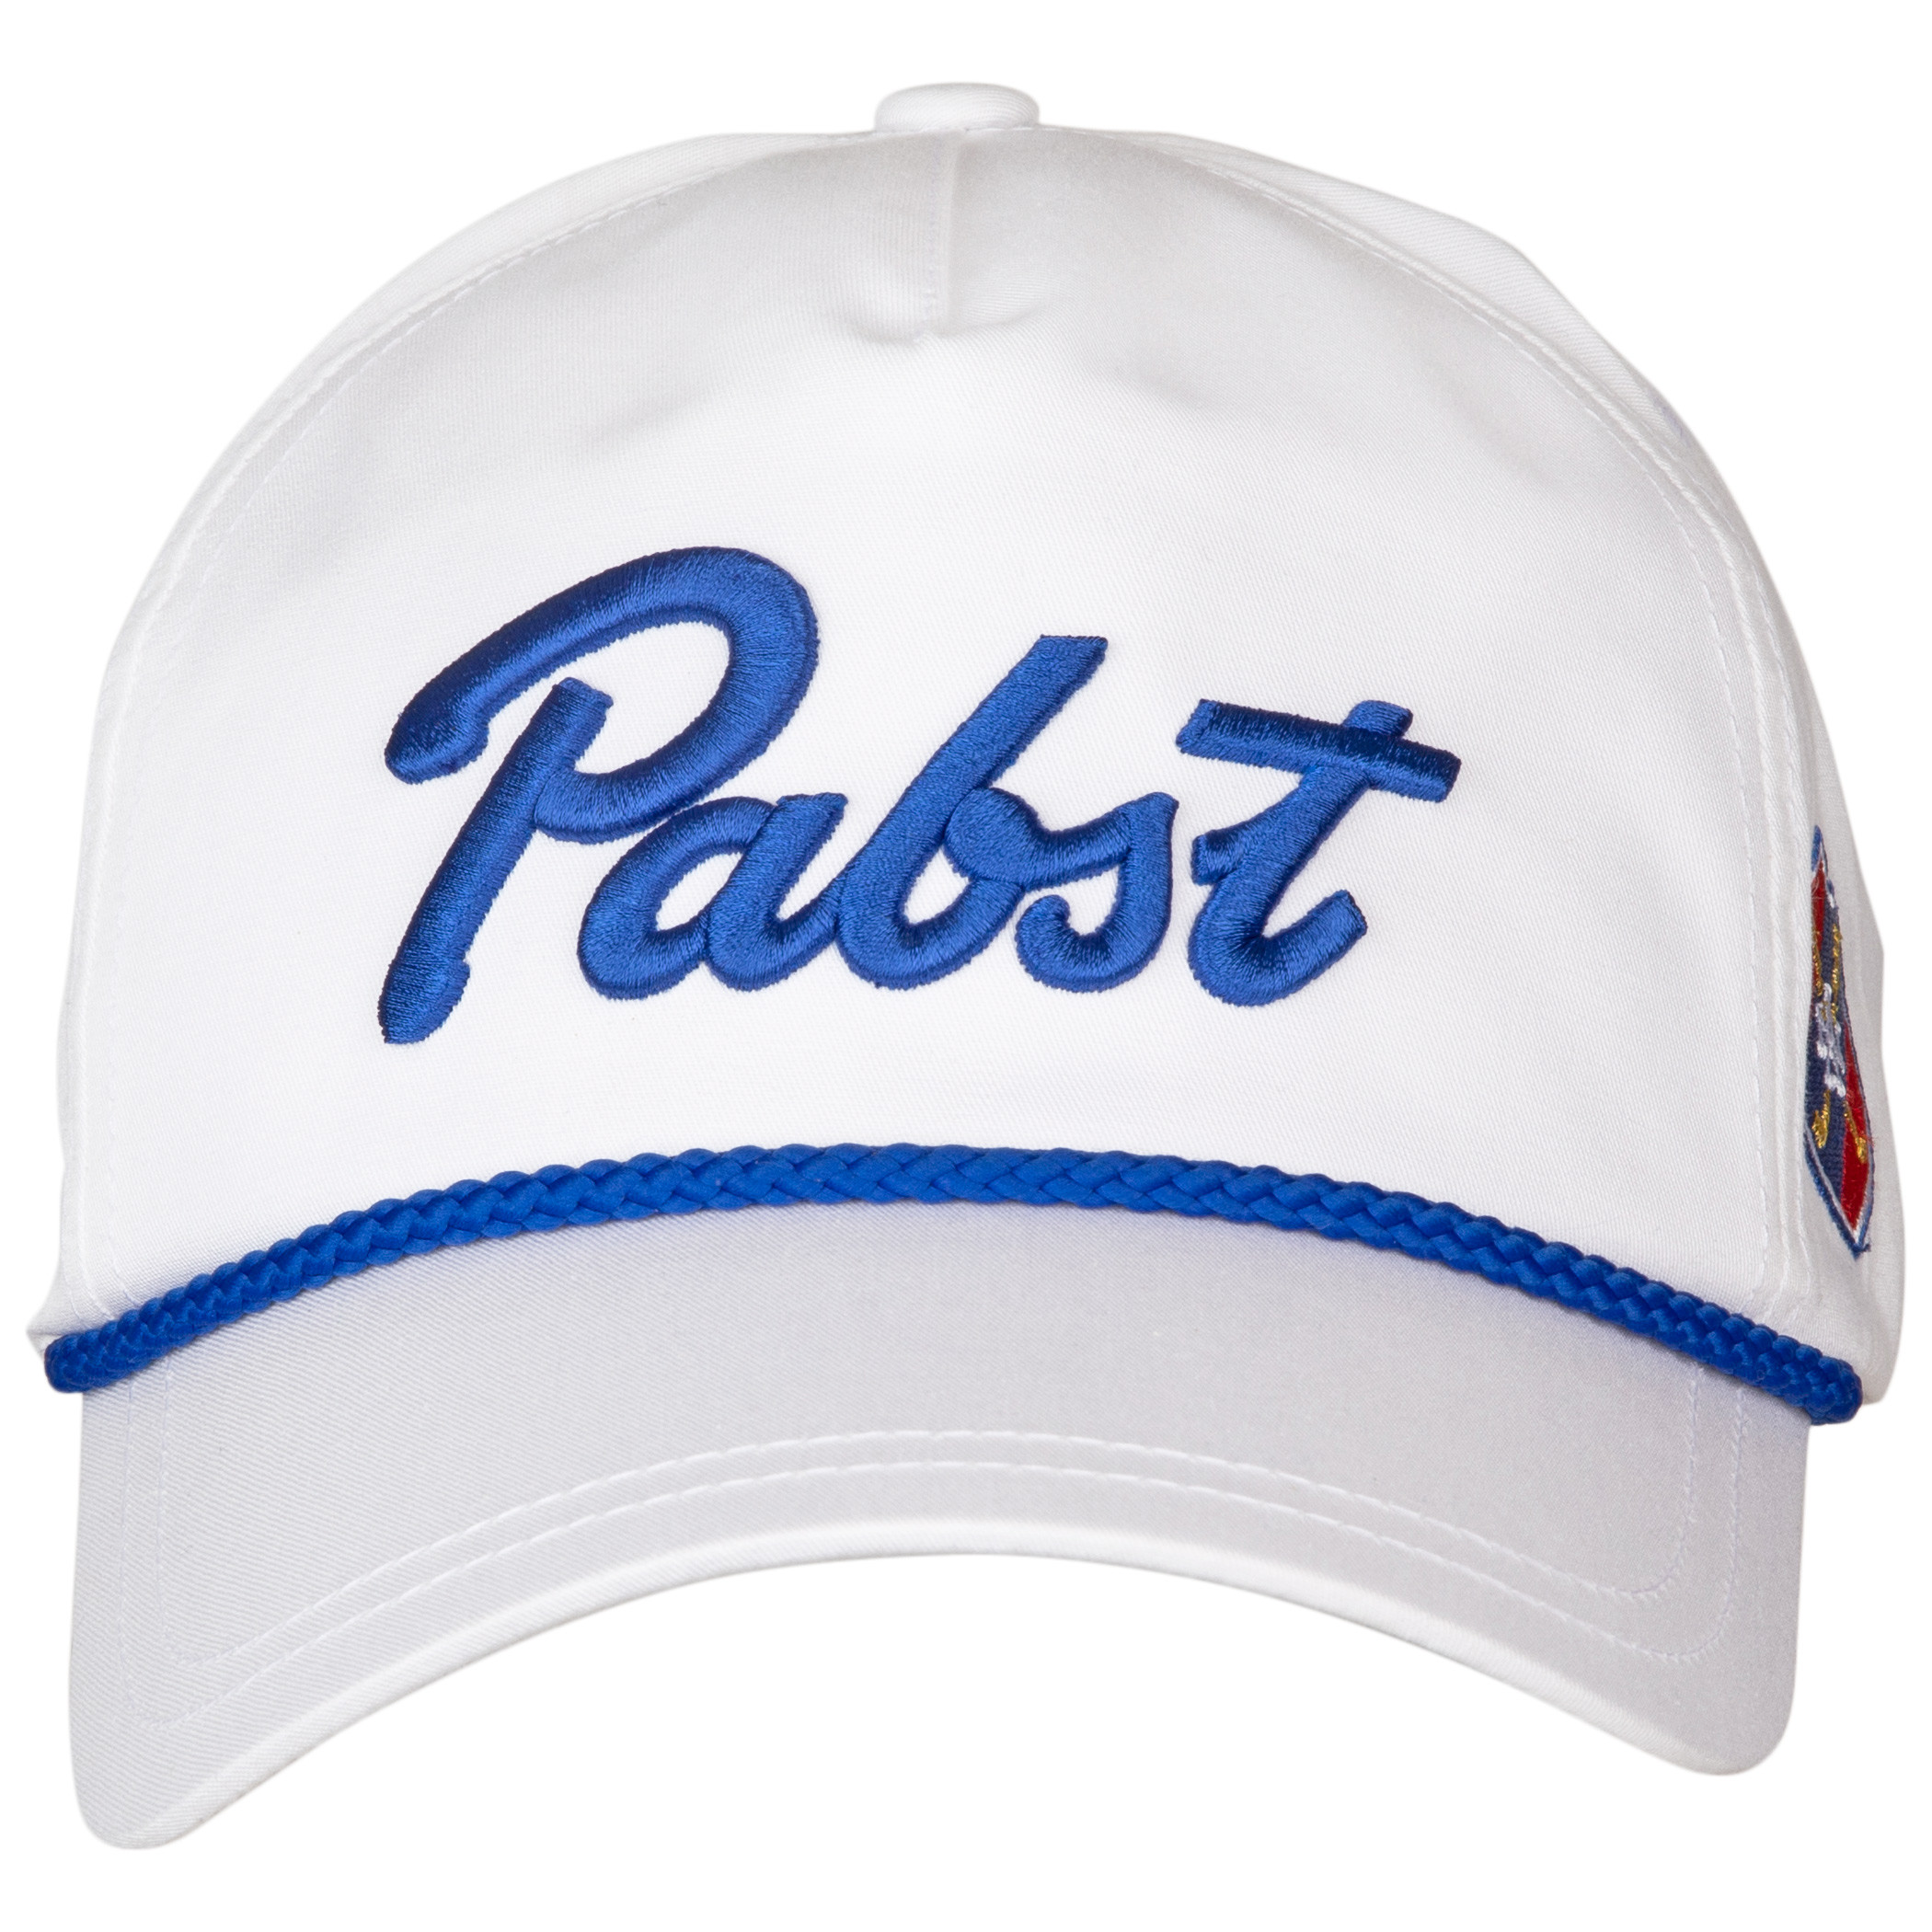 Pabst Blue Ribbon Roped Brim Hat